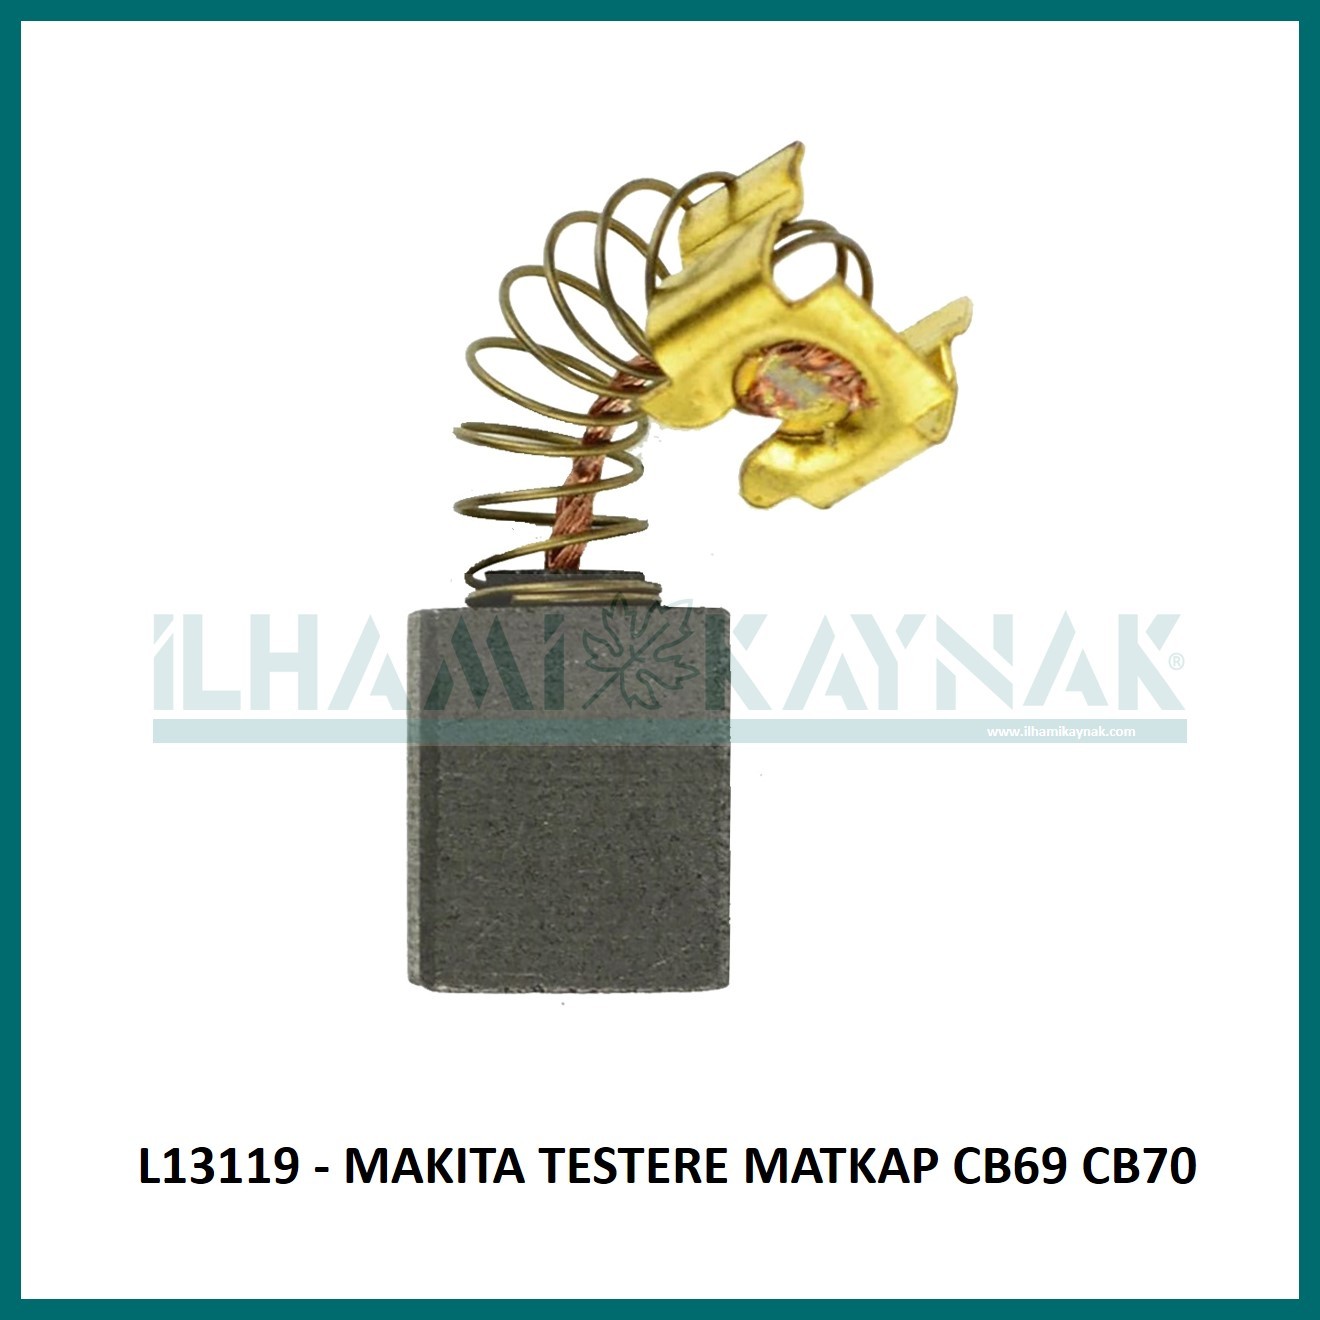 L13119 - MAKITA TESTERE MATKAP CB69 CB70 - 5*8*13 mm - 100 Adet